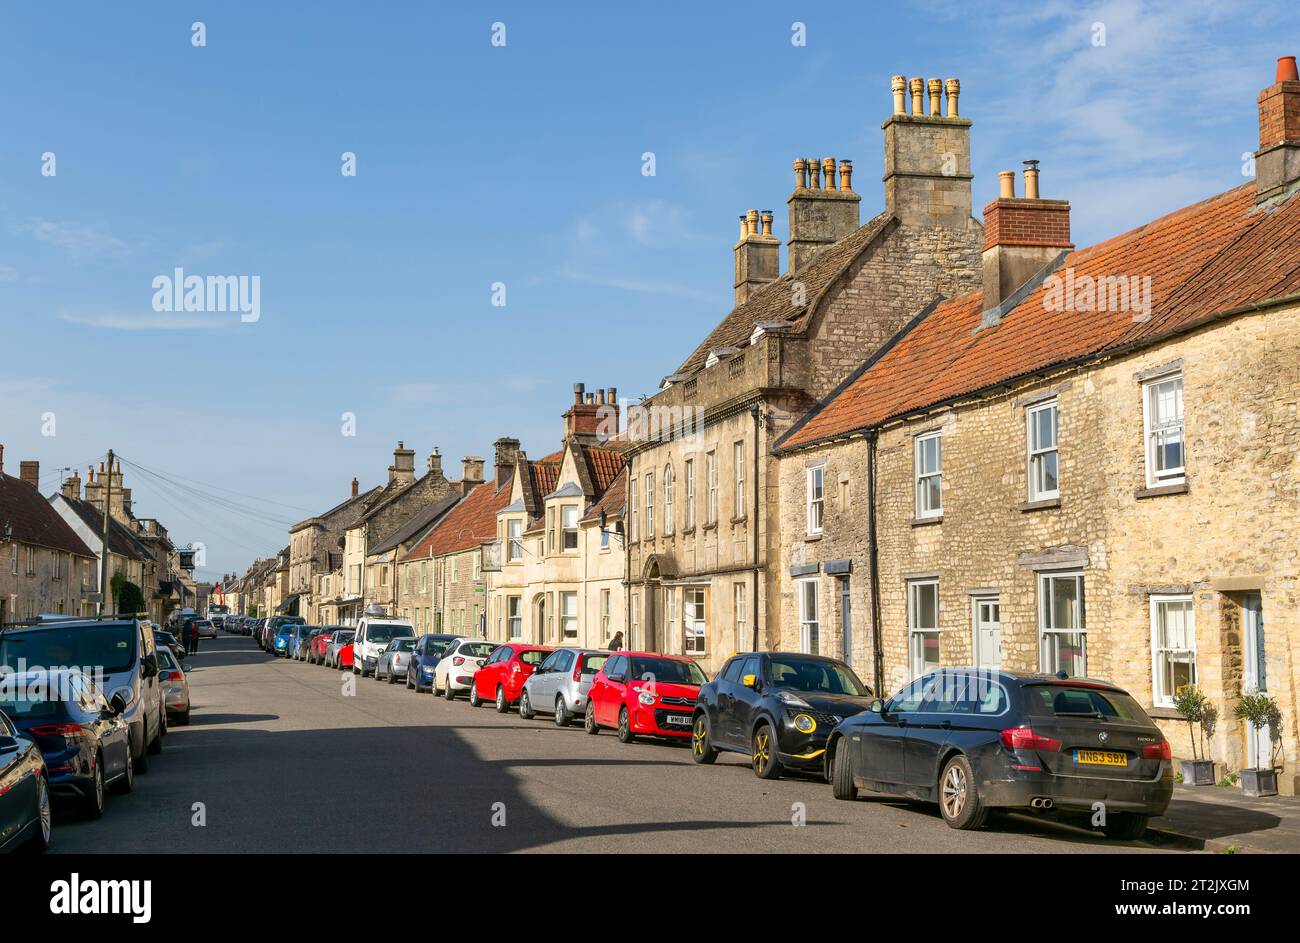 Cars parked on street of historic buildings, Marshfield, Gloucestershire, England, UK Stock Photo